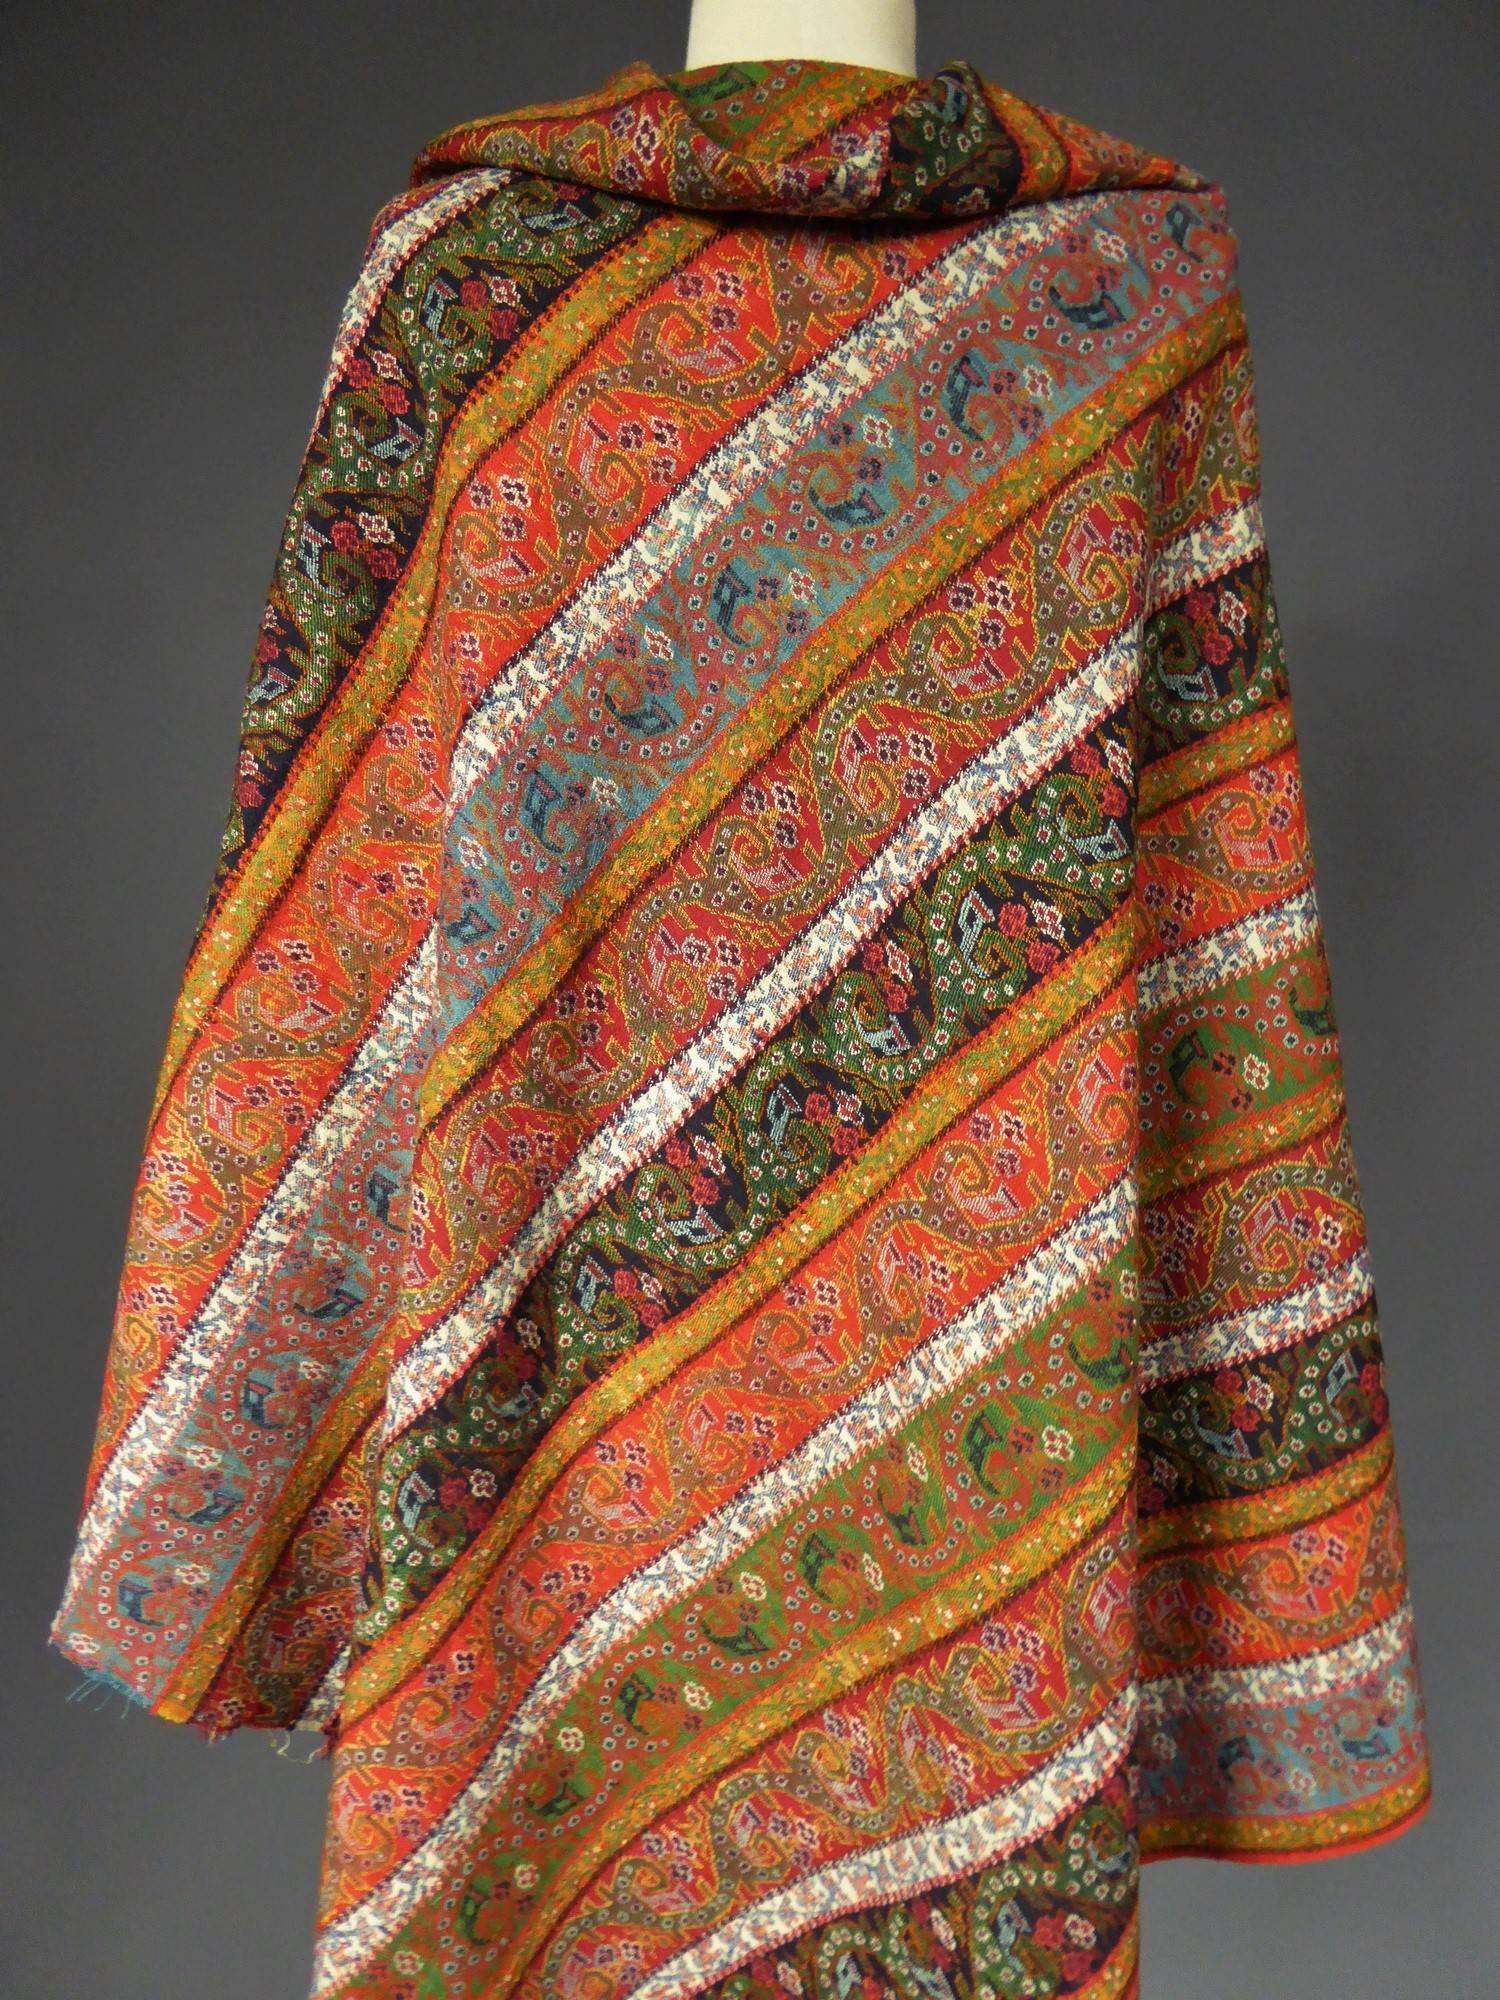 Twill weave striped kashmir shawl  - India or Persia 19th century 4